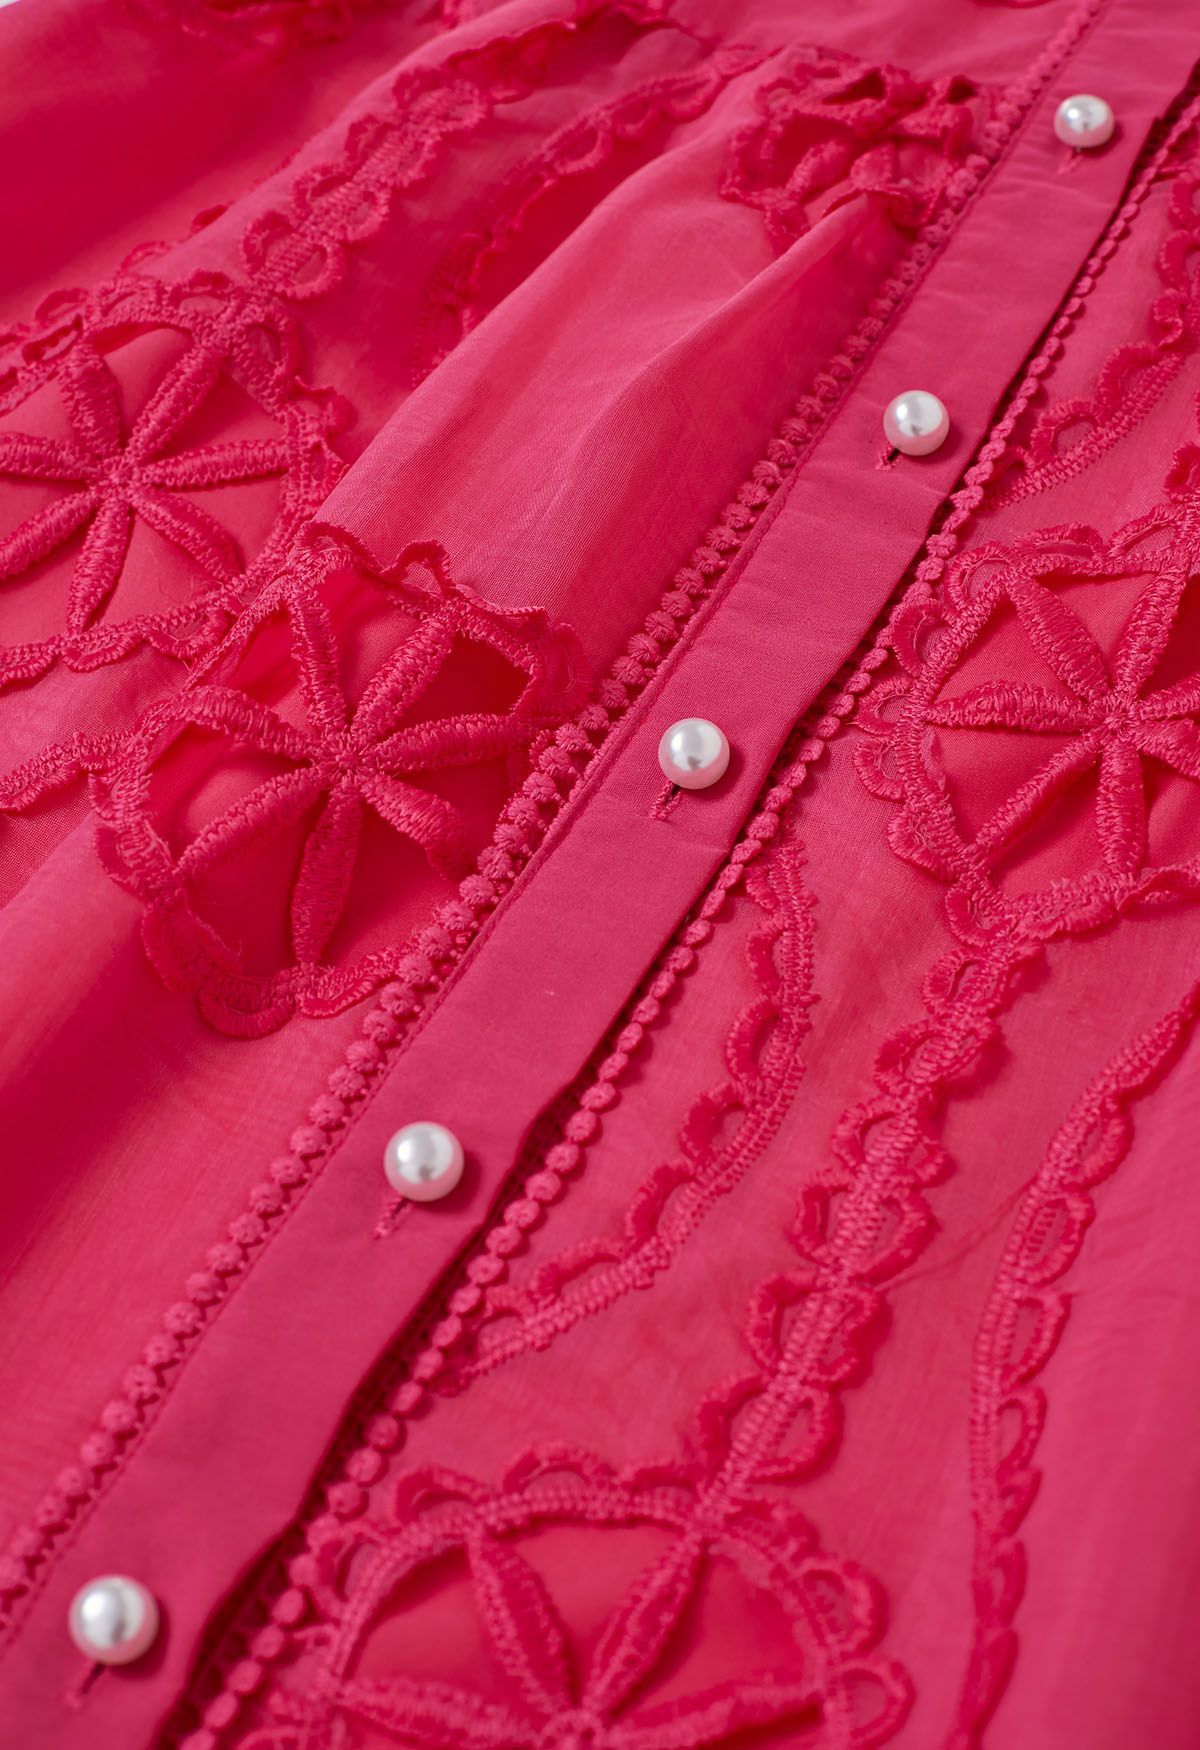 Cutwork Crochet Button Down Midi Dress in Hot Pink